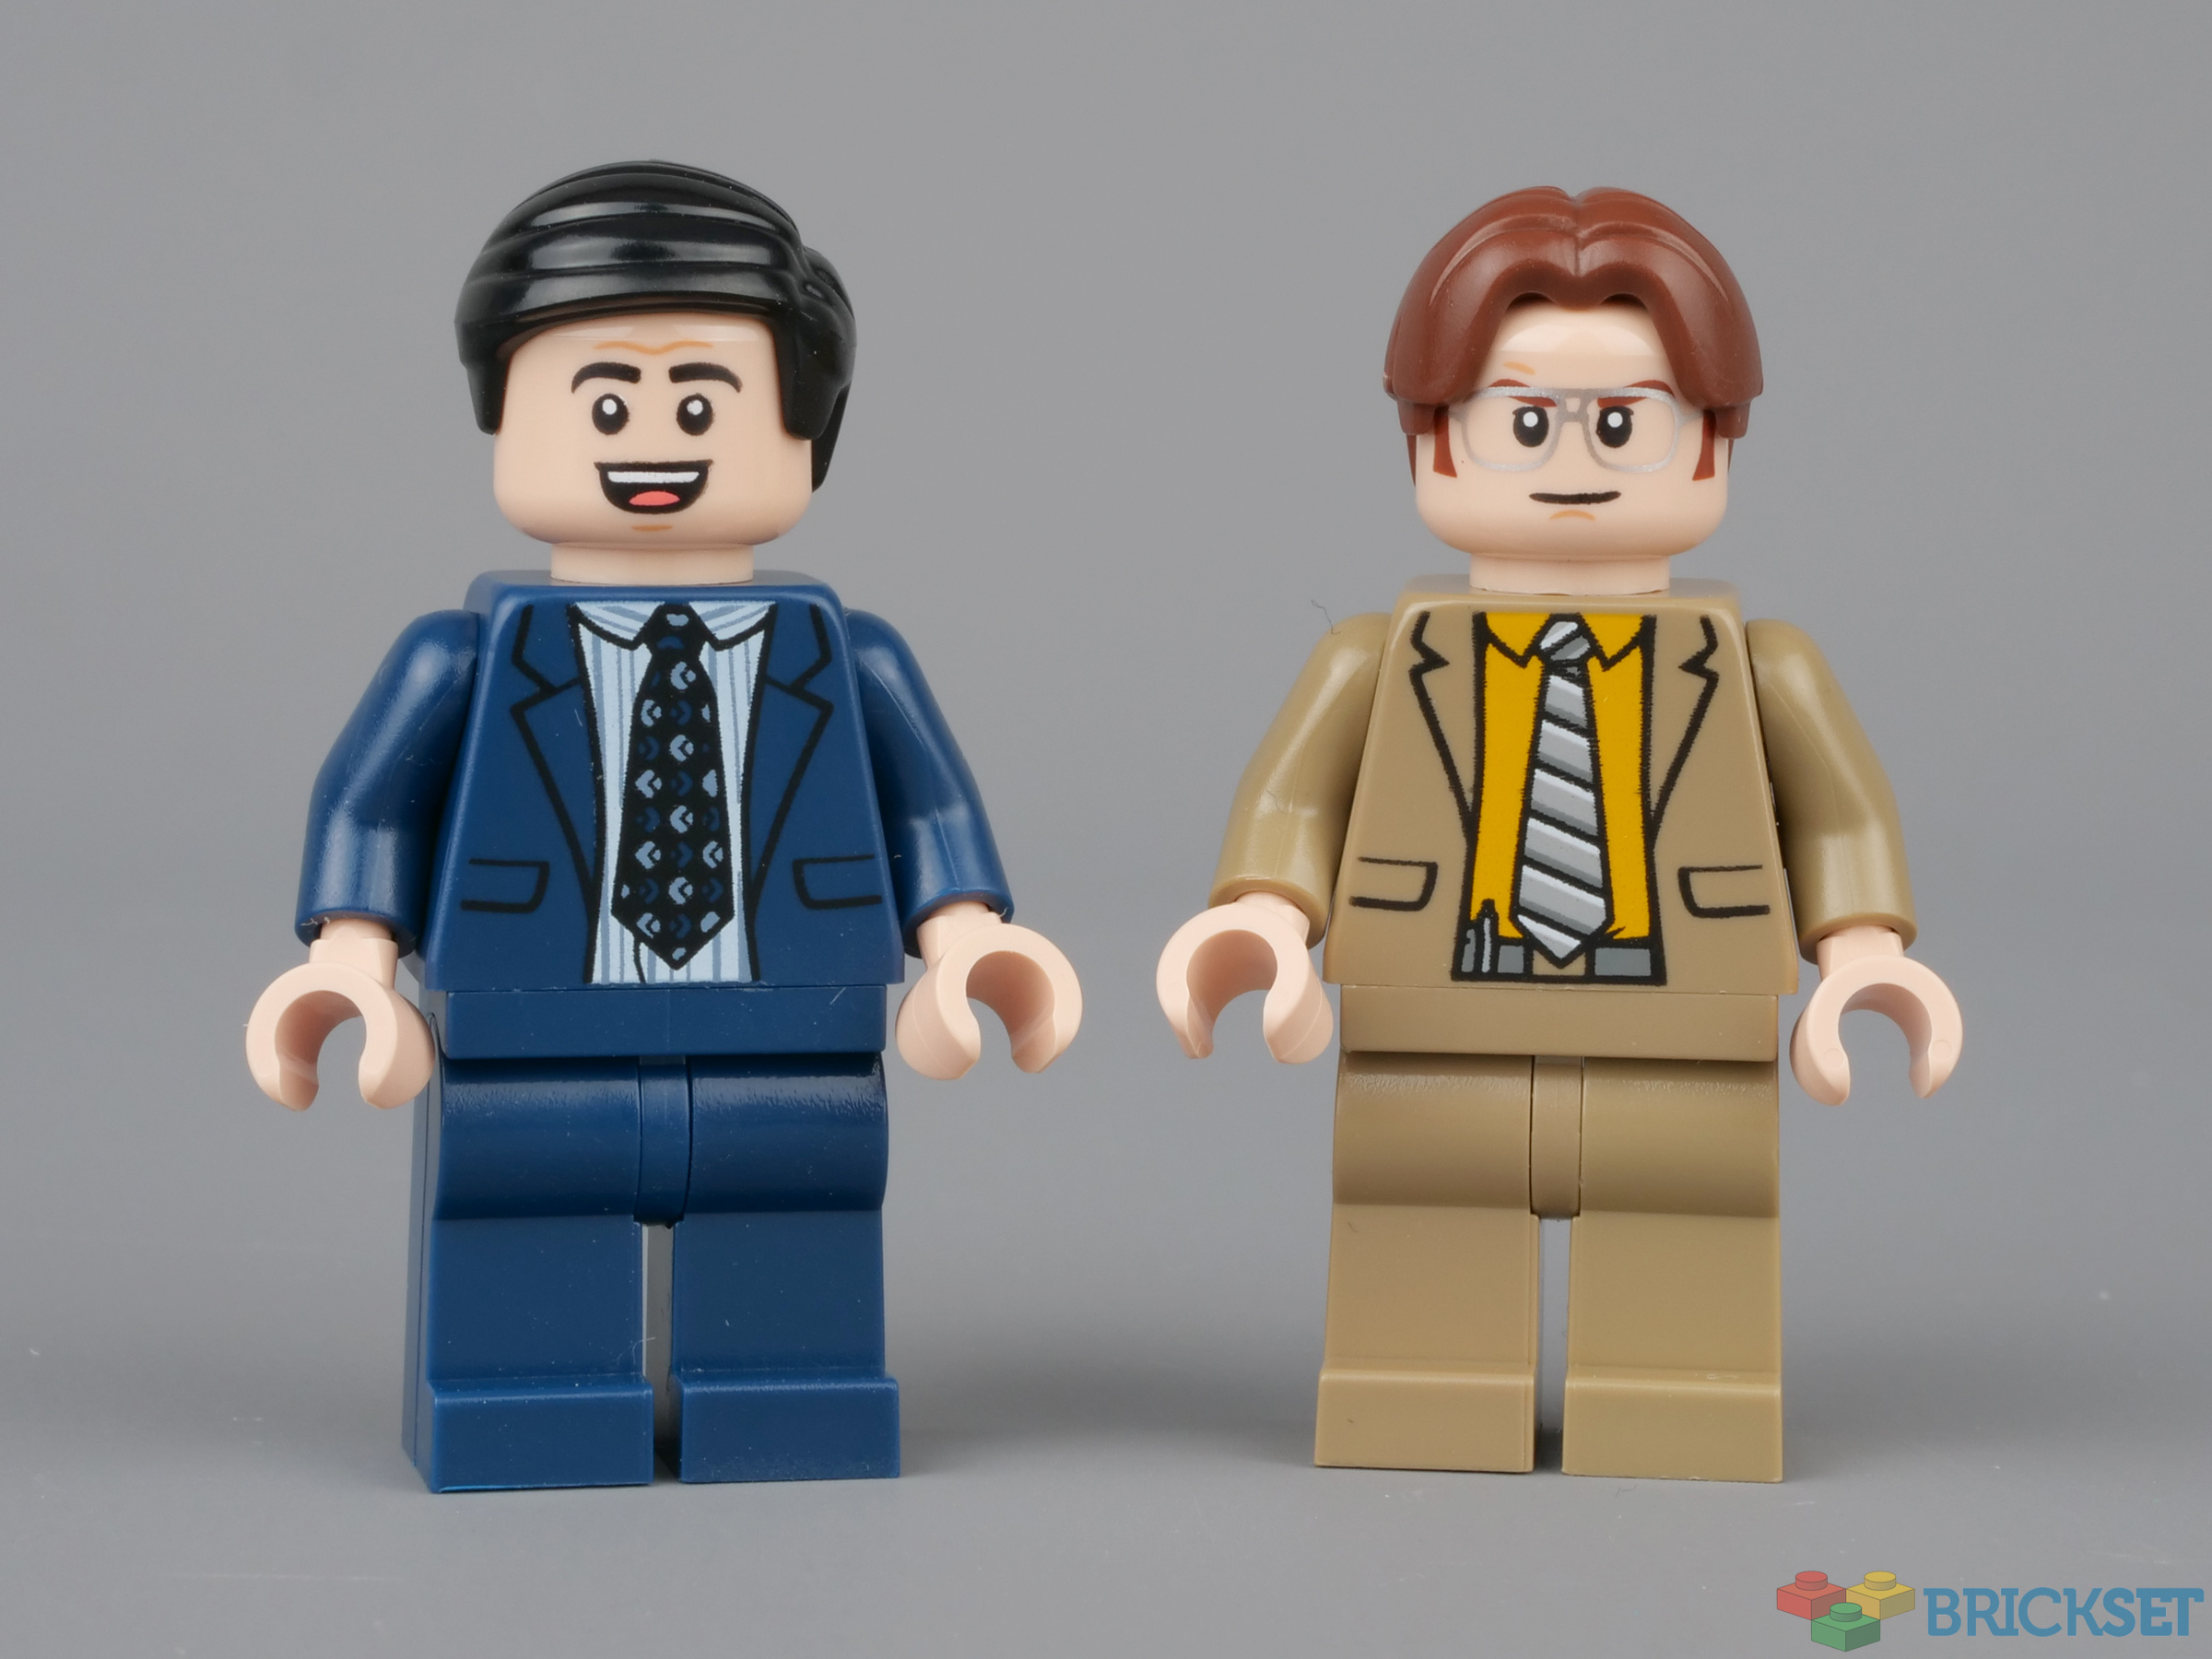 LEGO 21336 Office review | Brickset